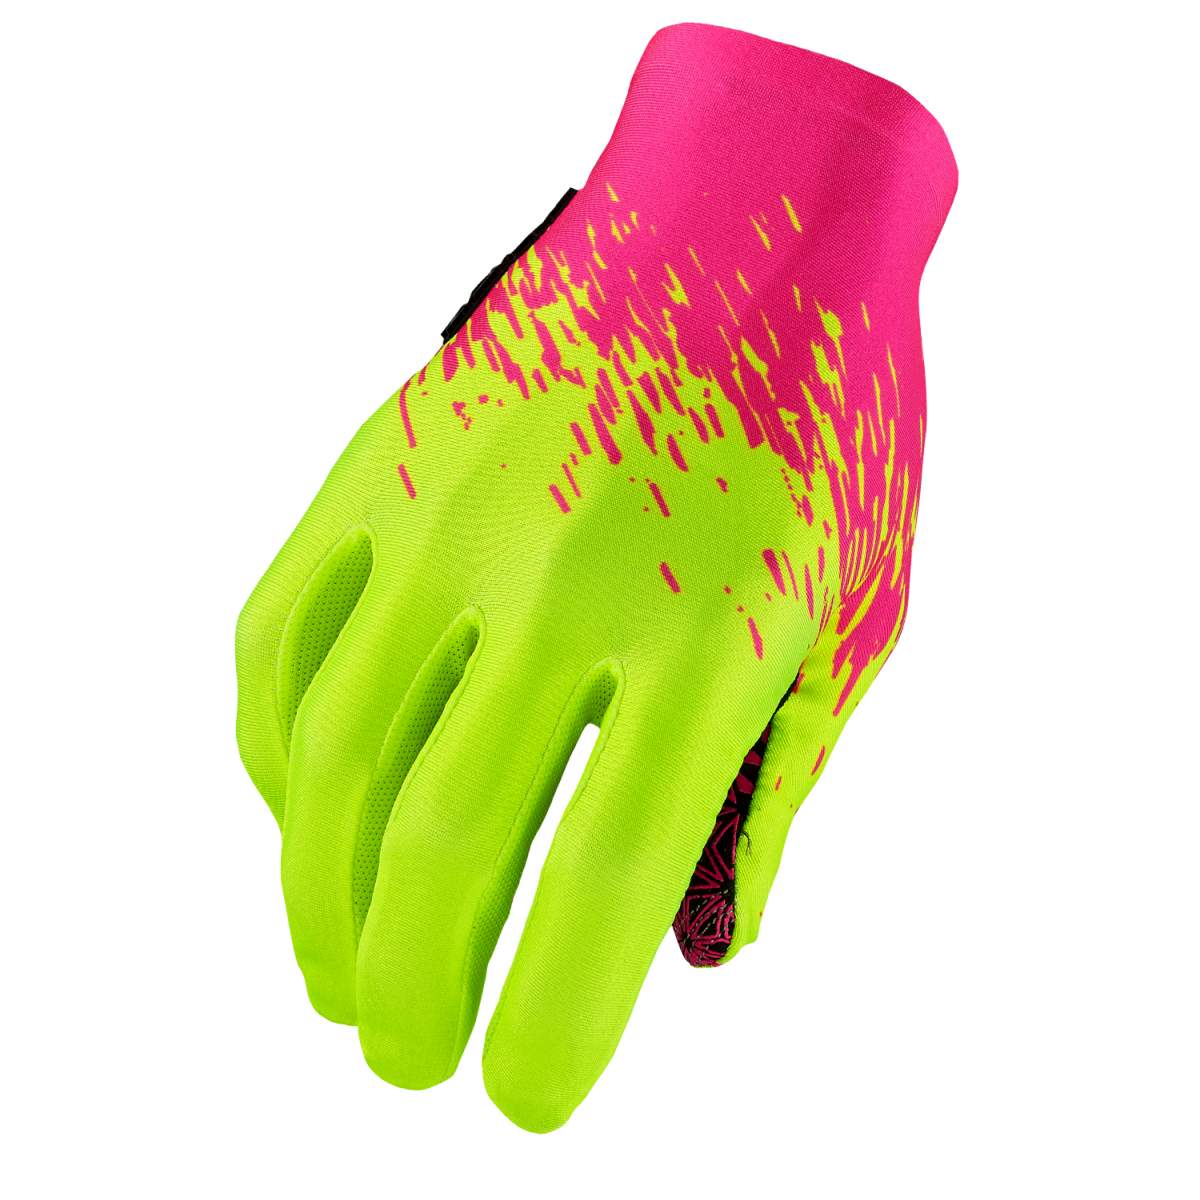 SupaG Long Glove - Neon Pink/Neon Yellow - XL